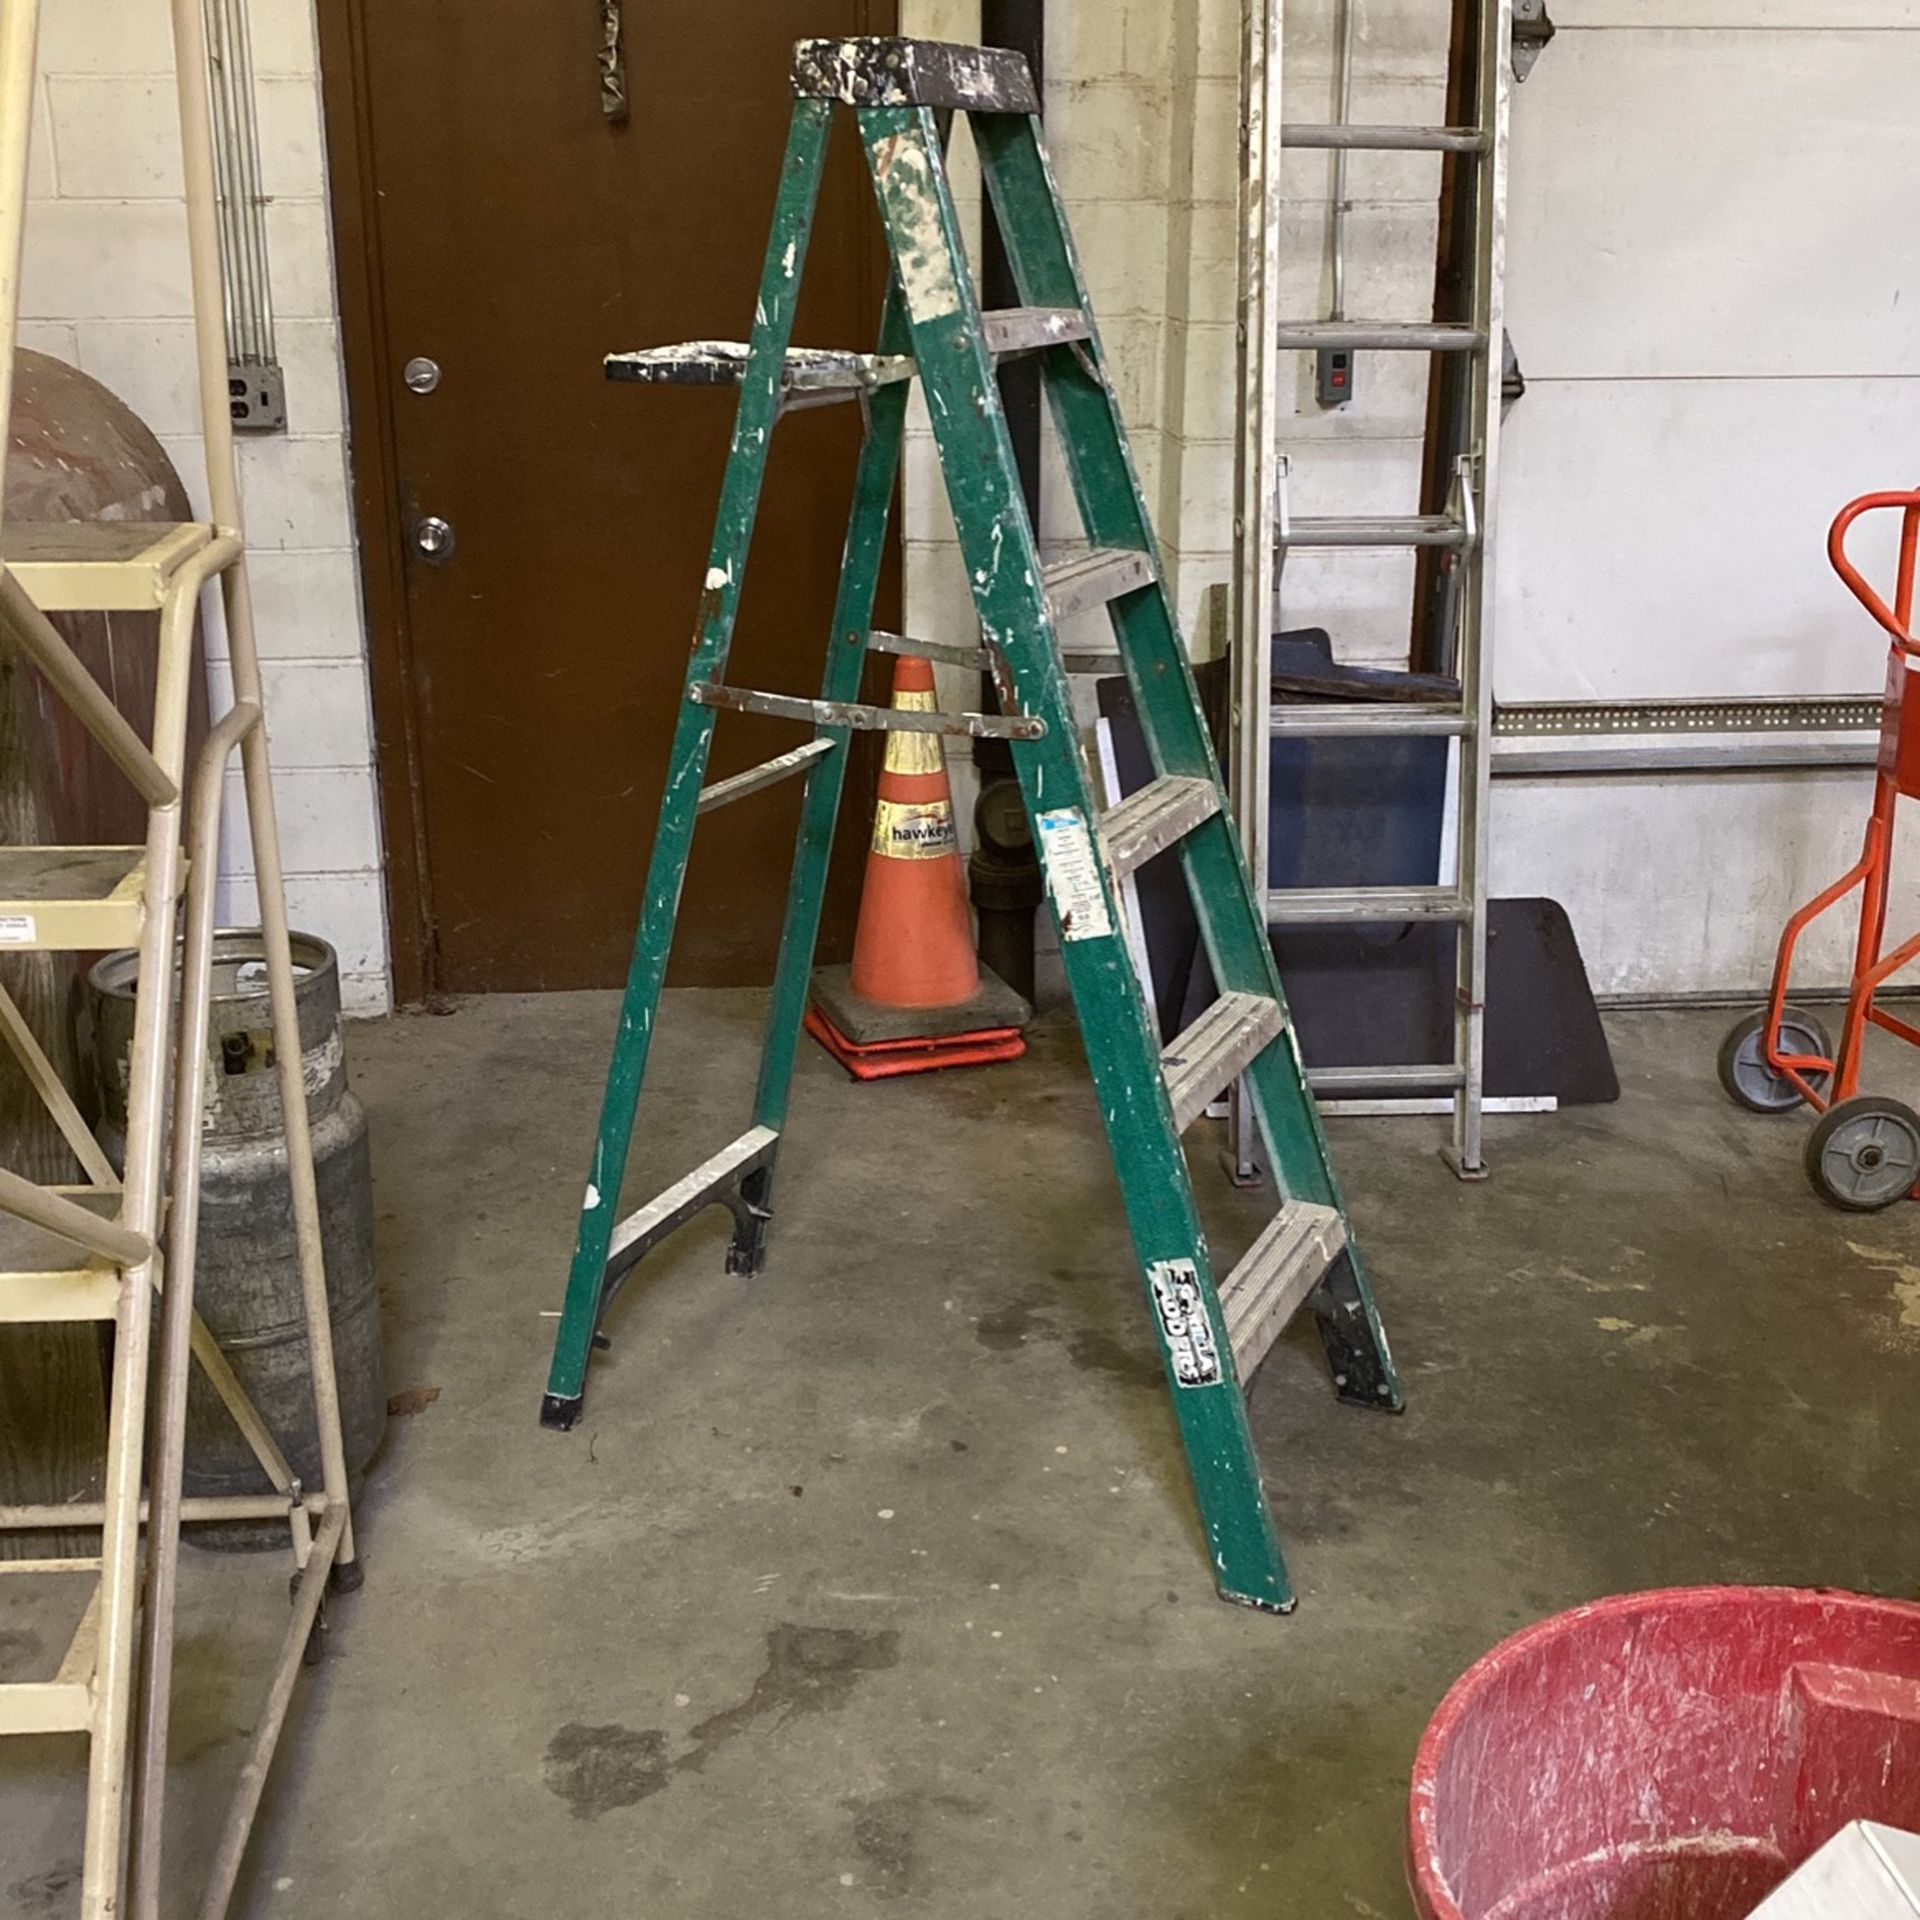 6 foot Gorilla ladderone sided step ladder